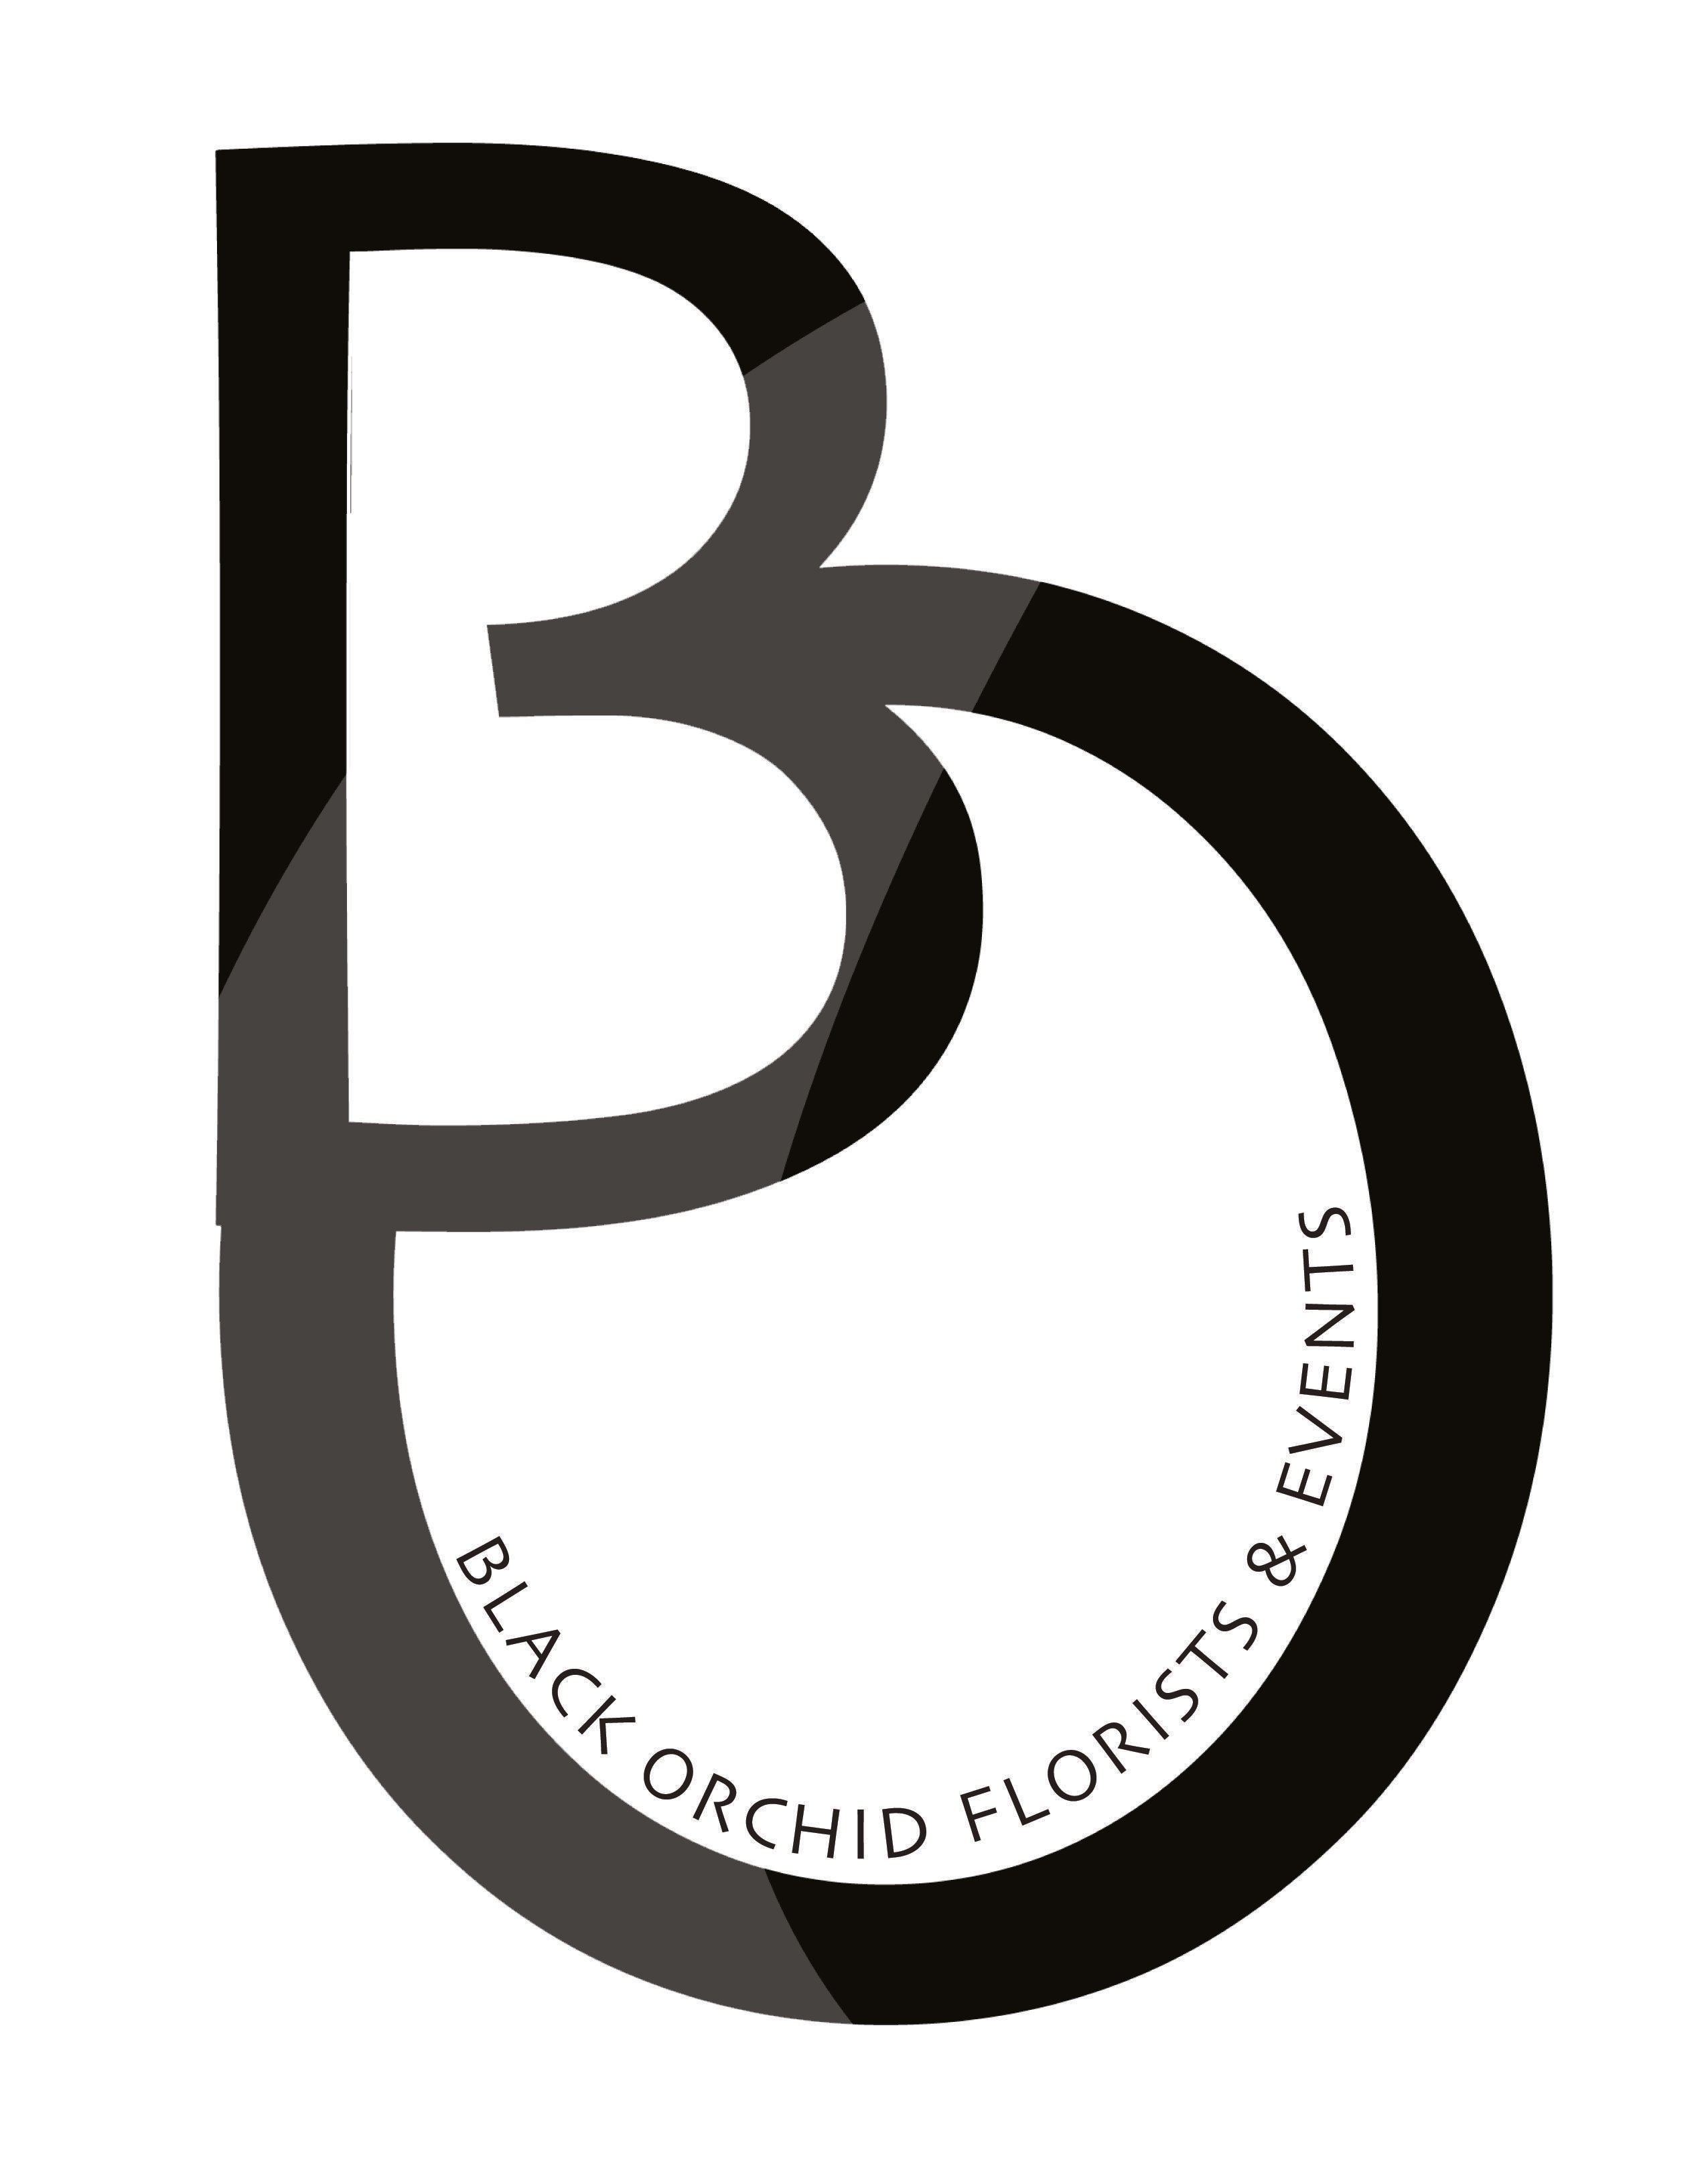 Flower Power Company Logo - Pin by Daryl Thompson on Quartet Creative | Pinterest | Event logo ...